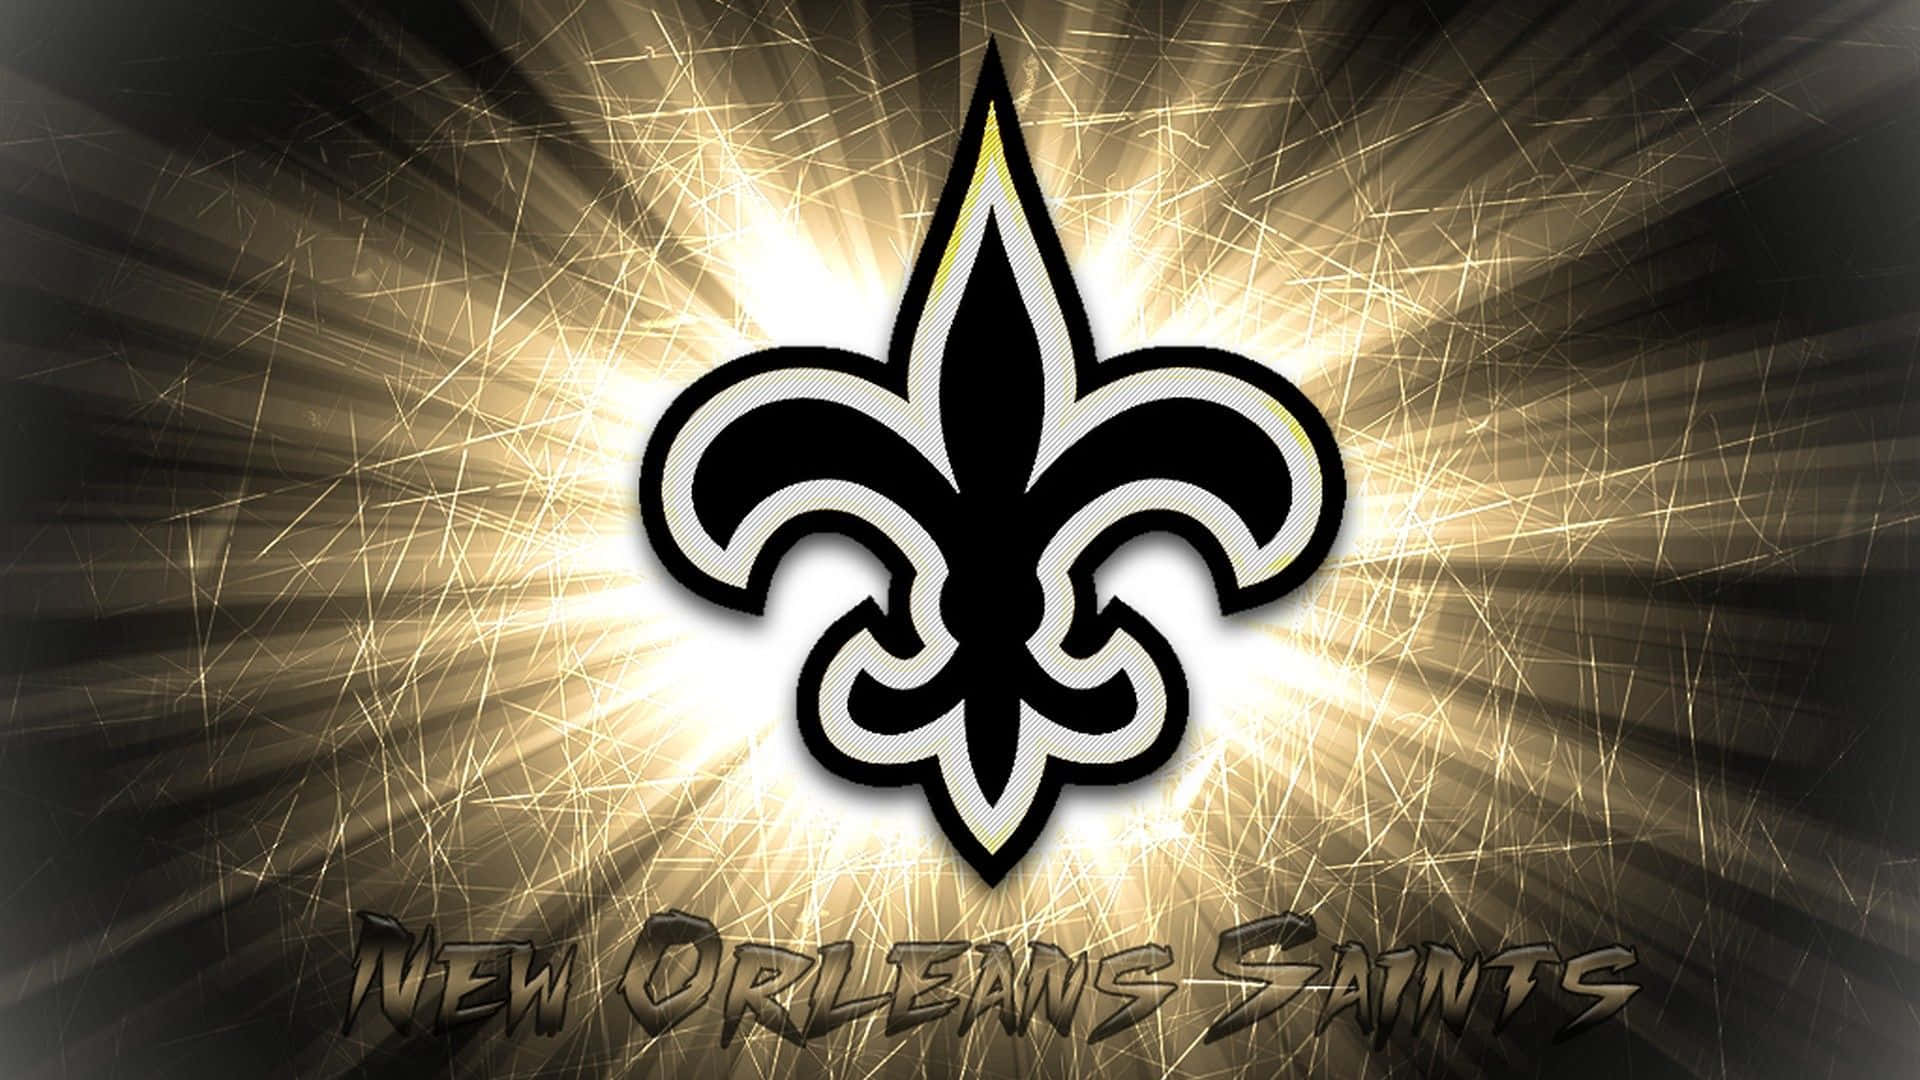 New Orleans Saints Take Flight Wallpaper